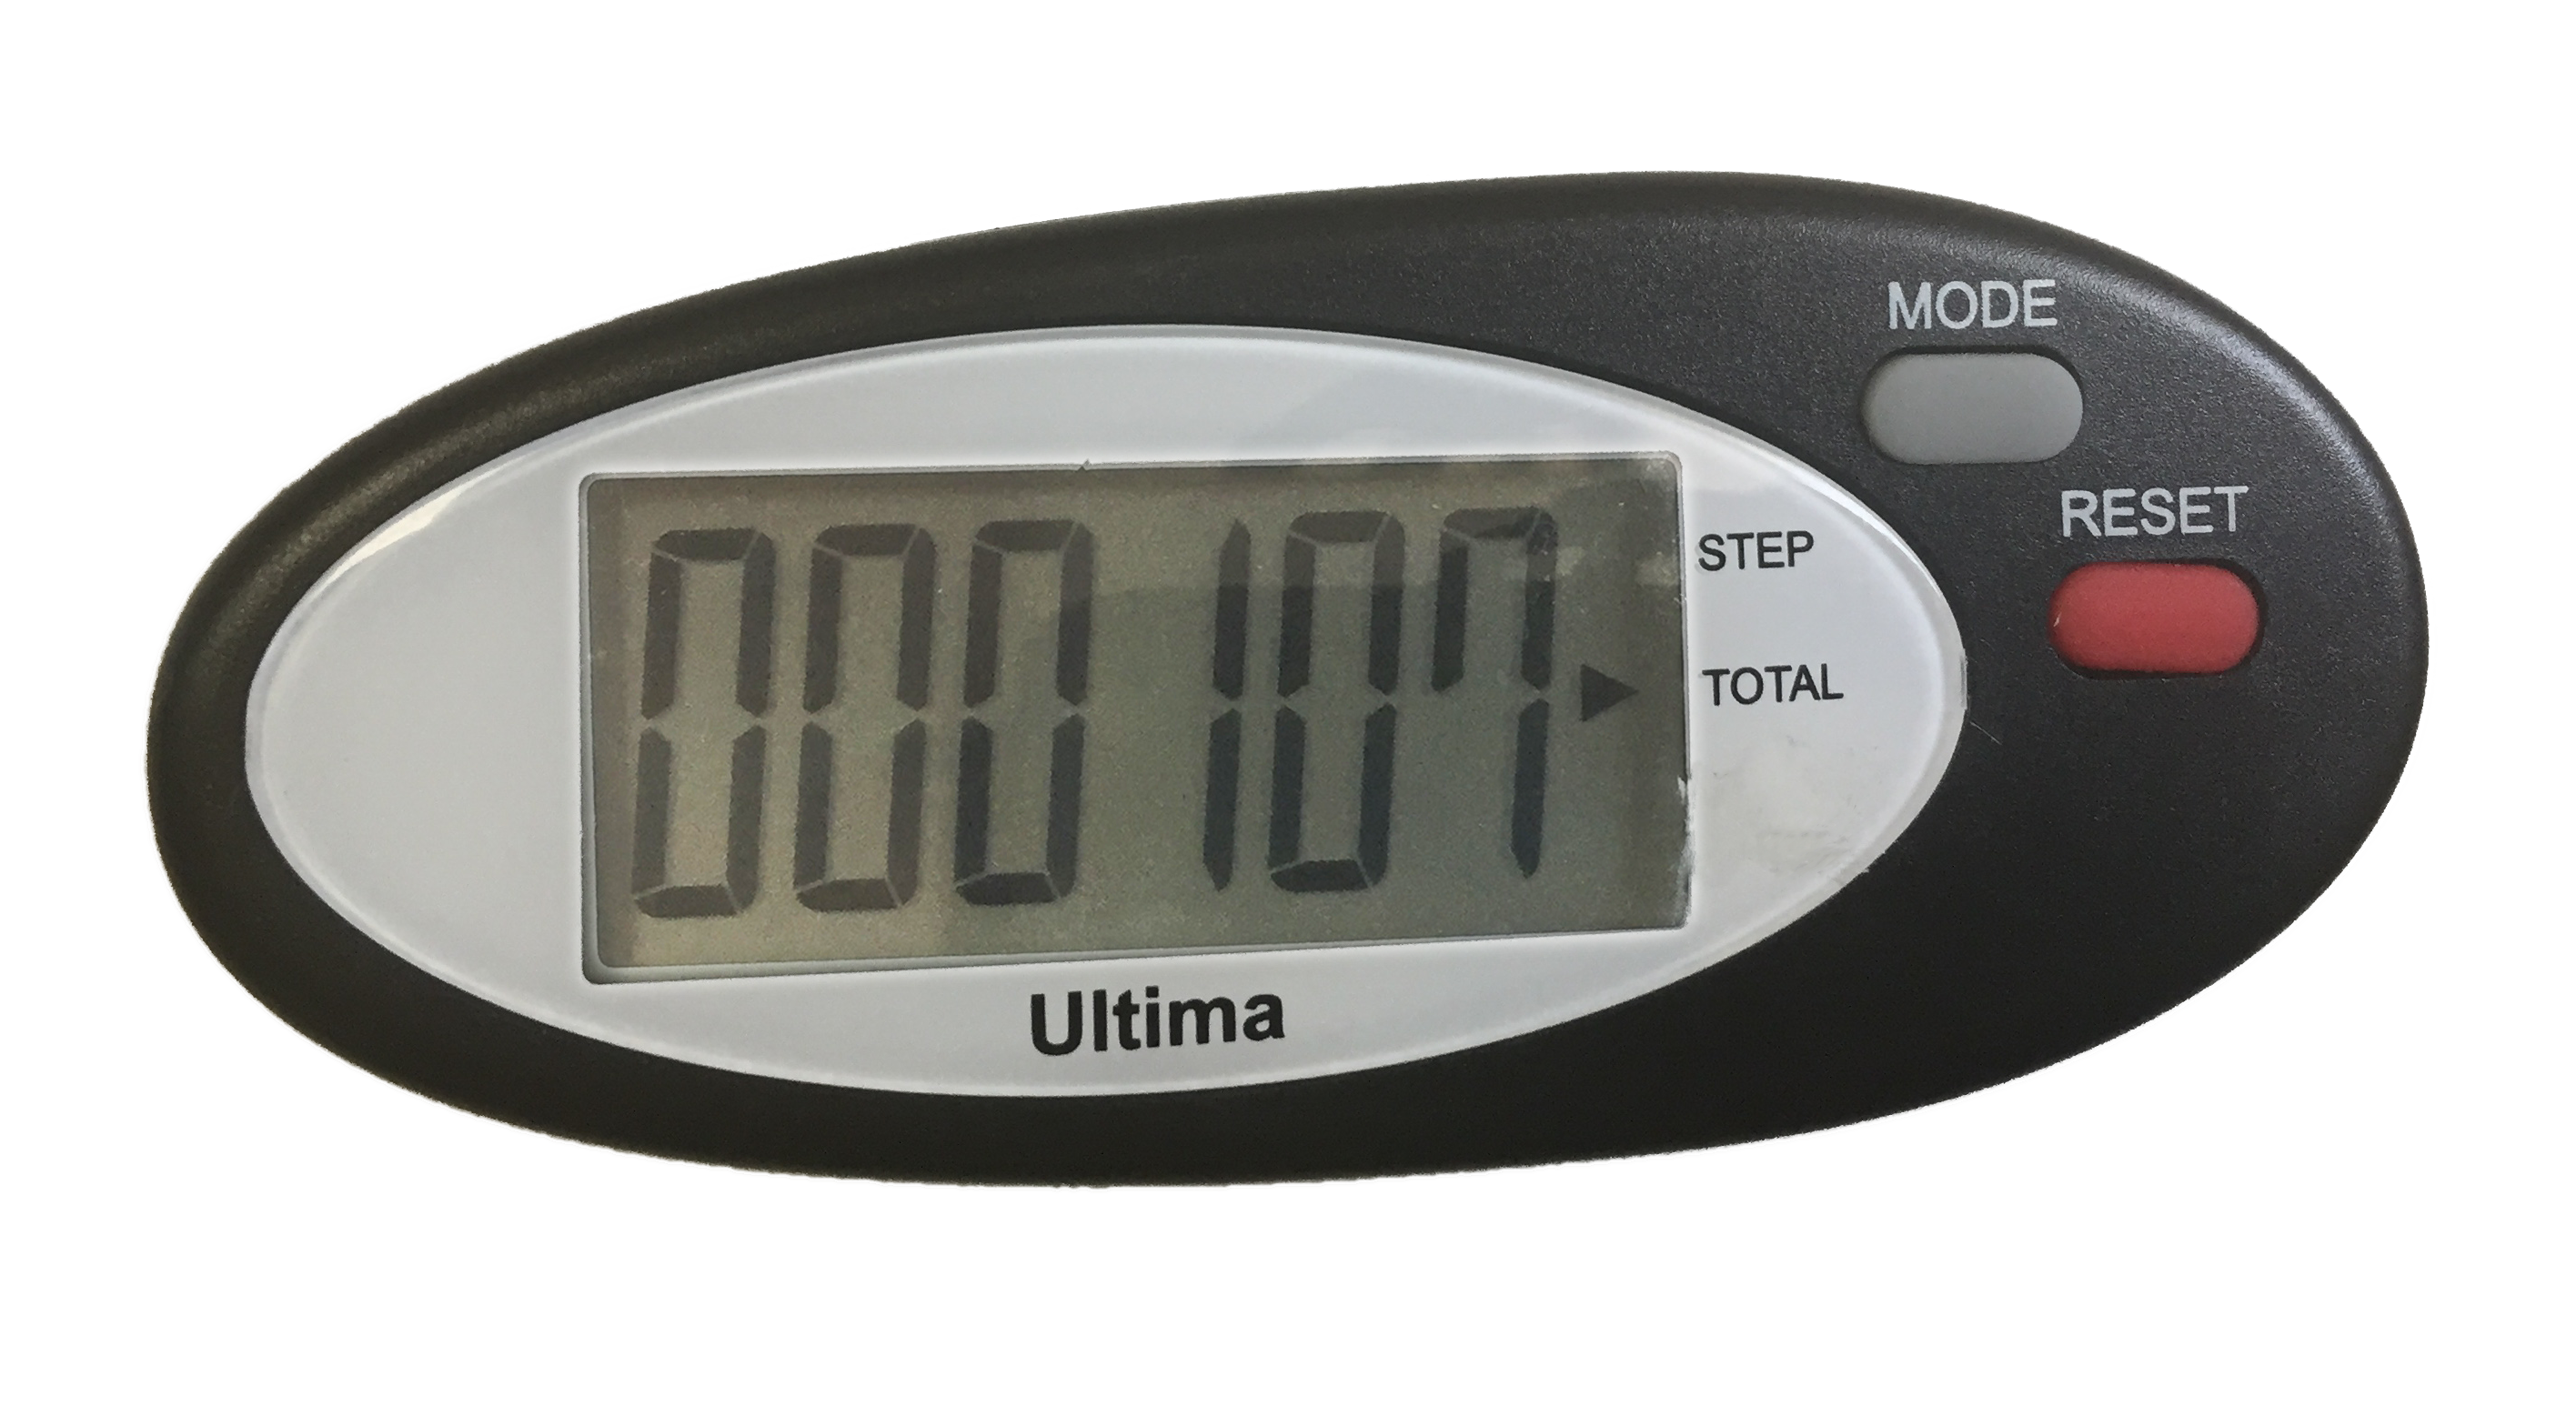 Ultima 102 MVPA G-Sensor Pedometer